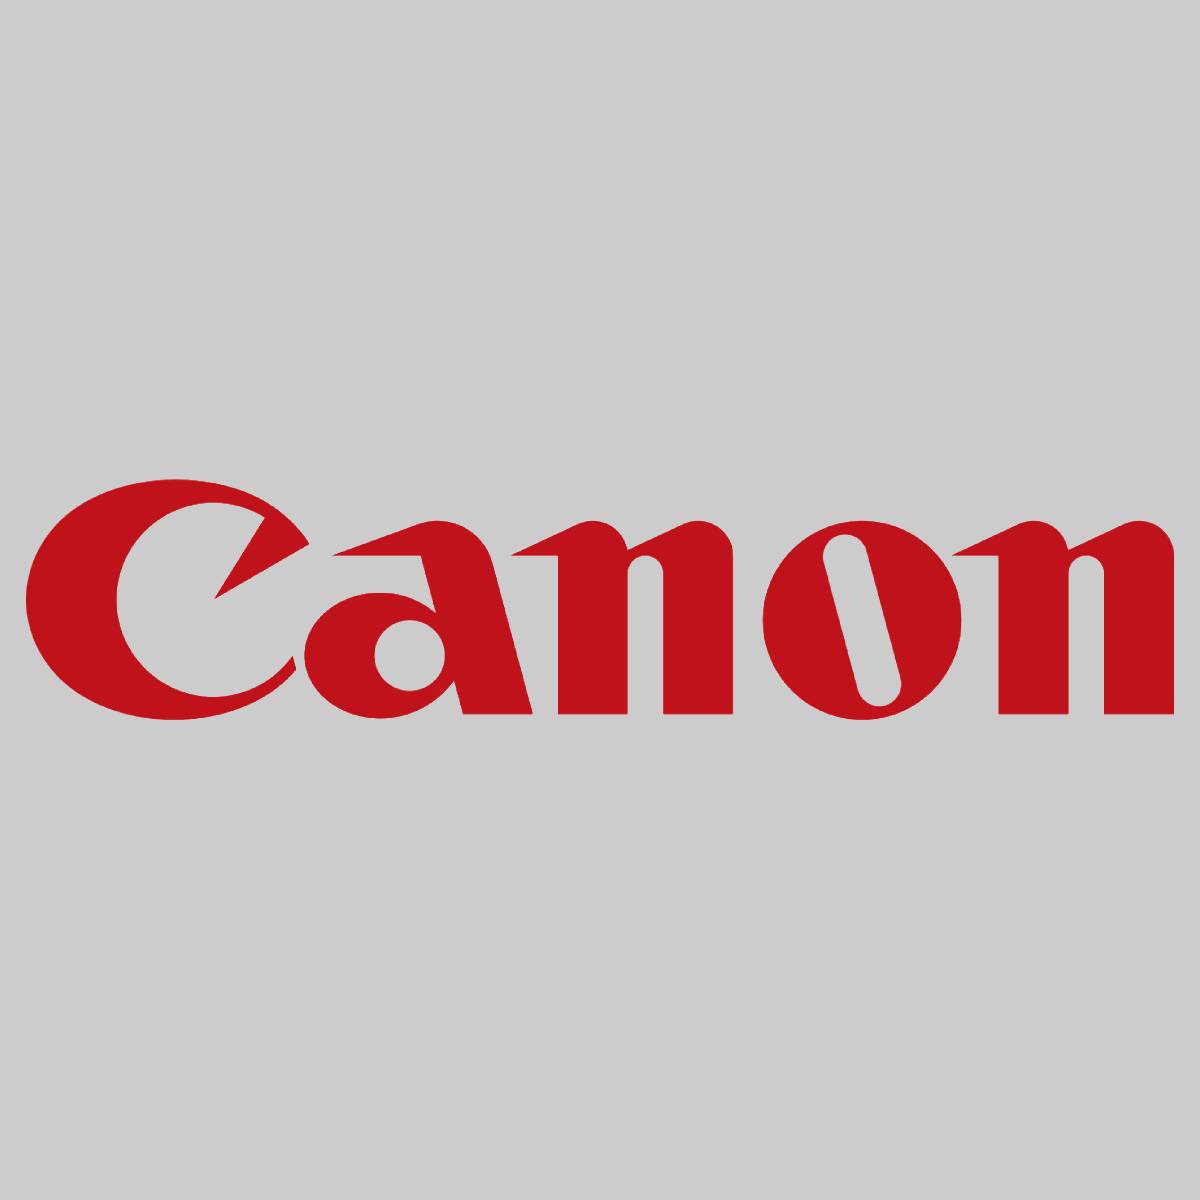 "Original Canon Developing Assy Yellow FM4-6612 iR Adv C7055i C7065i C9060 C9070